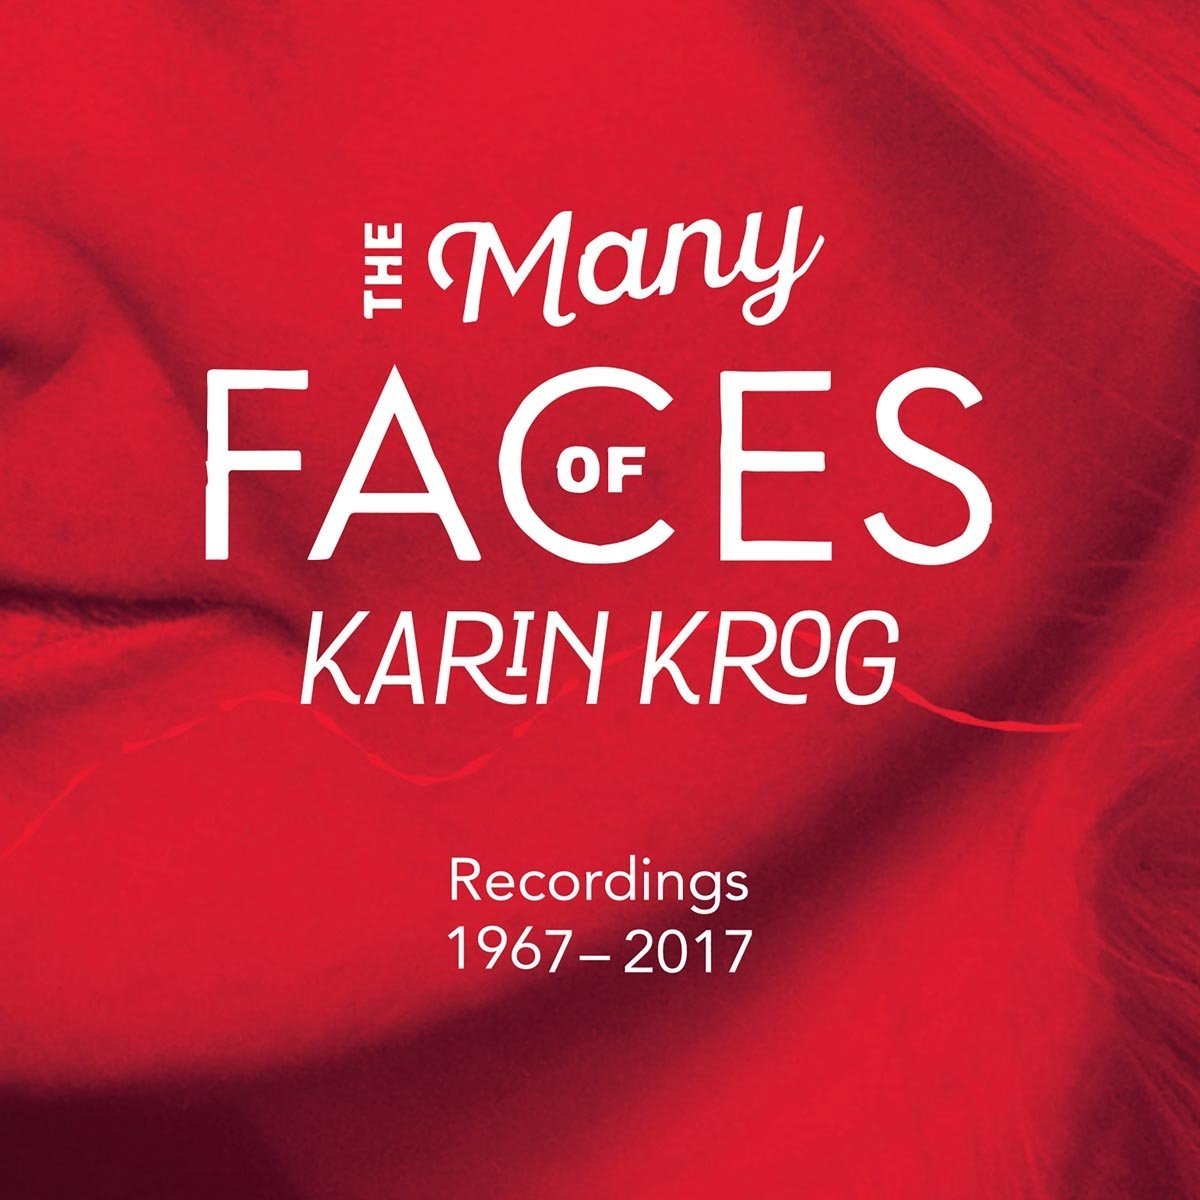 KARIN KROG - The Many Faces Of Karin Krog (1967-2017) cover 